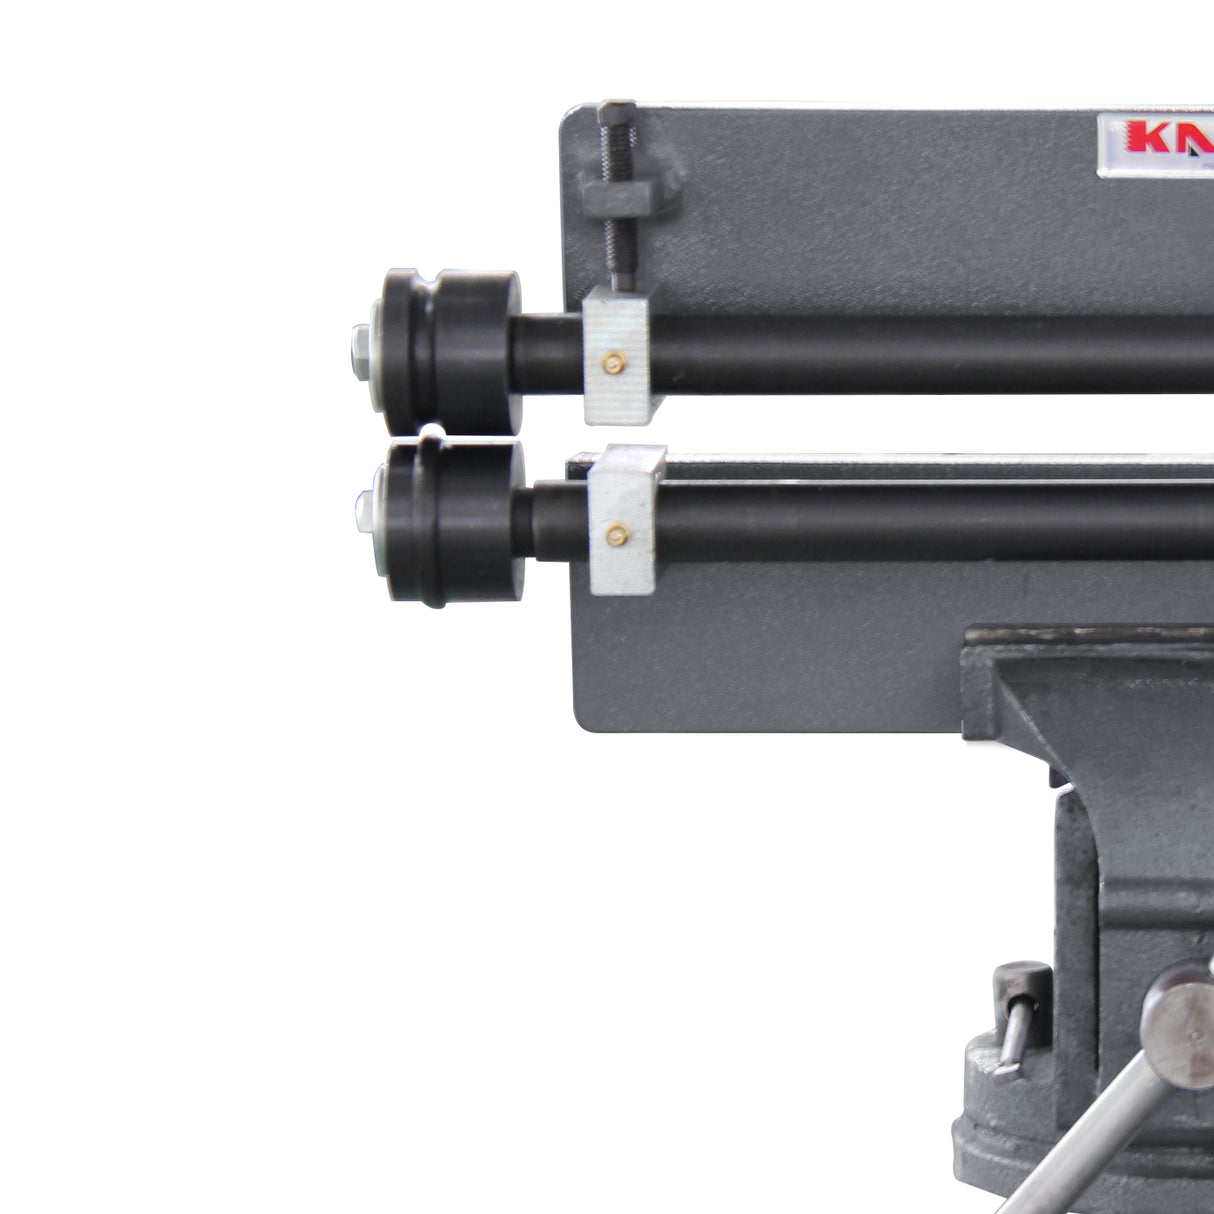 Kaka Industrial Kaka RM-12 Sheet Metal Fabrication Bead Roller Kit & Forming Mandrels